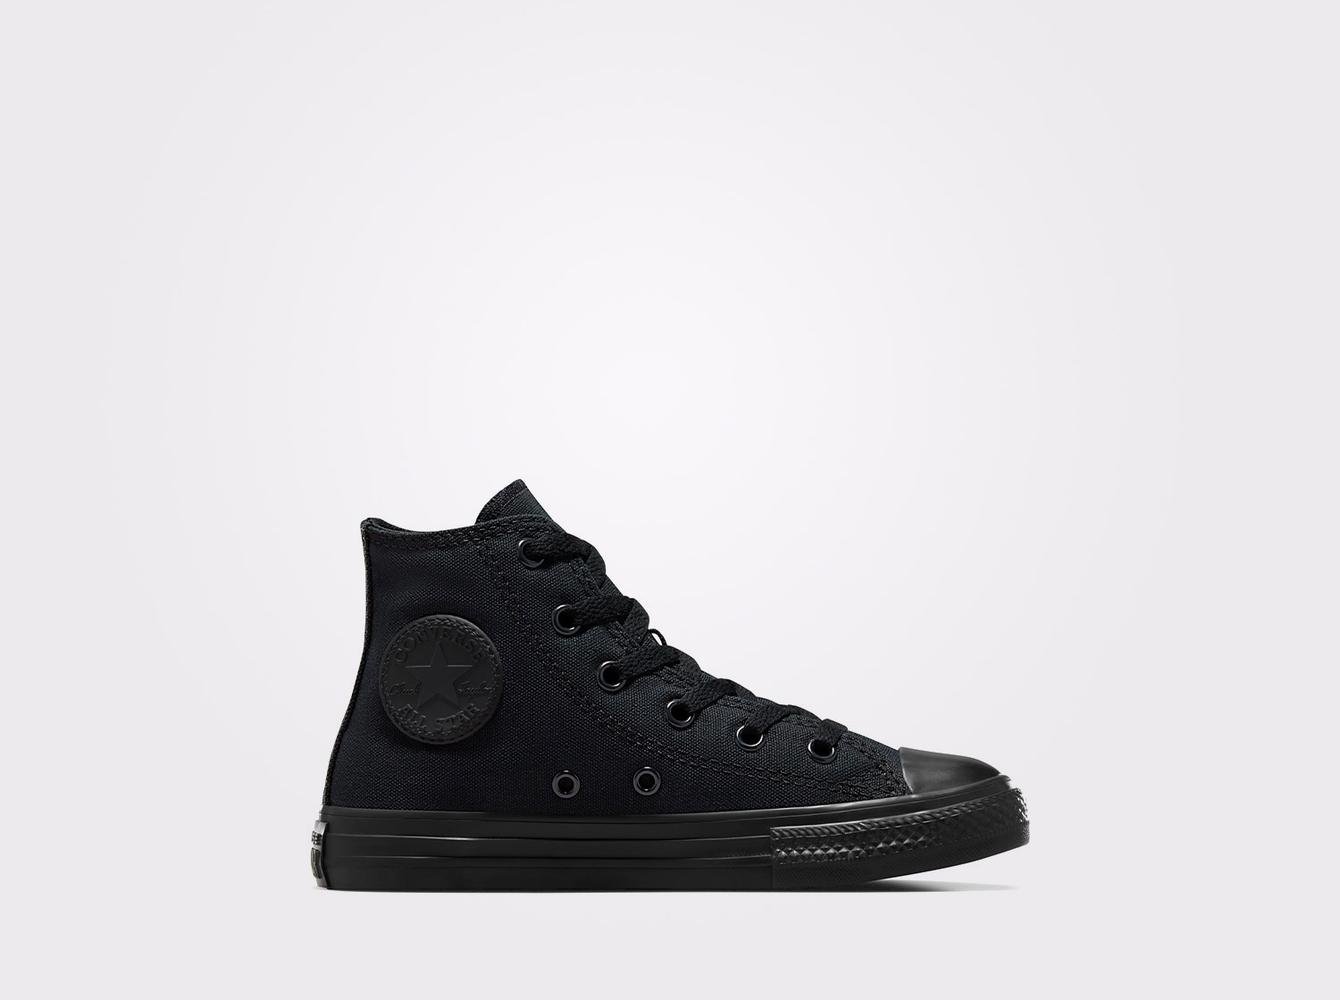 Converse Chuck Taylor All Star Çocuk Siyah Sneaker